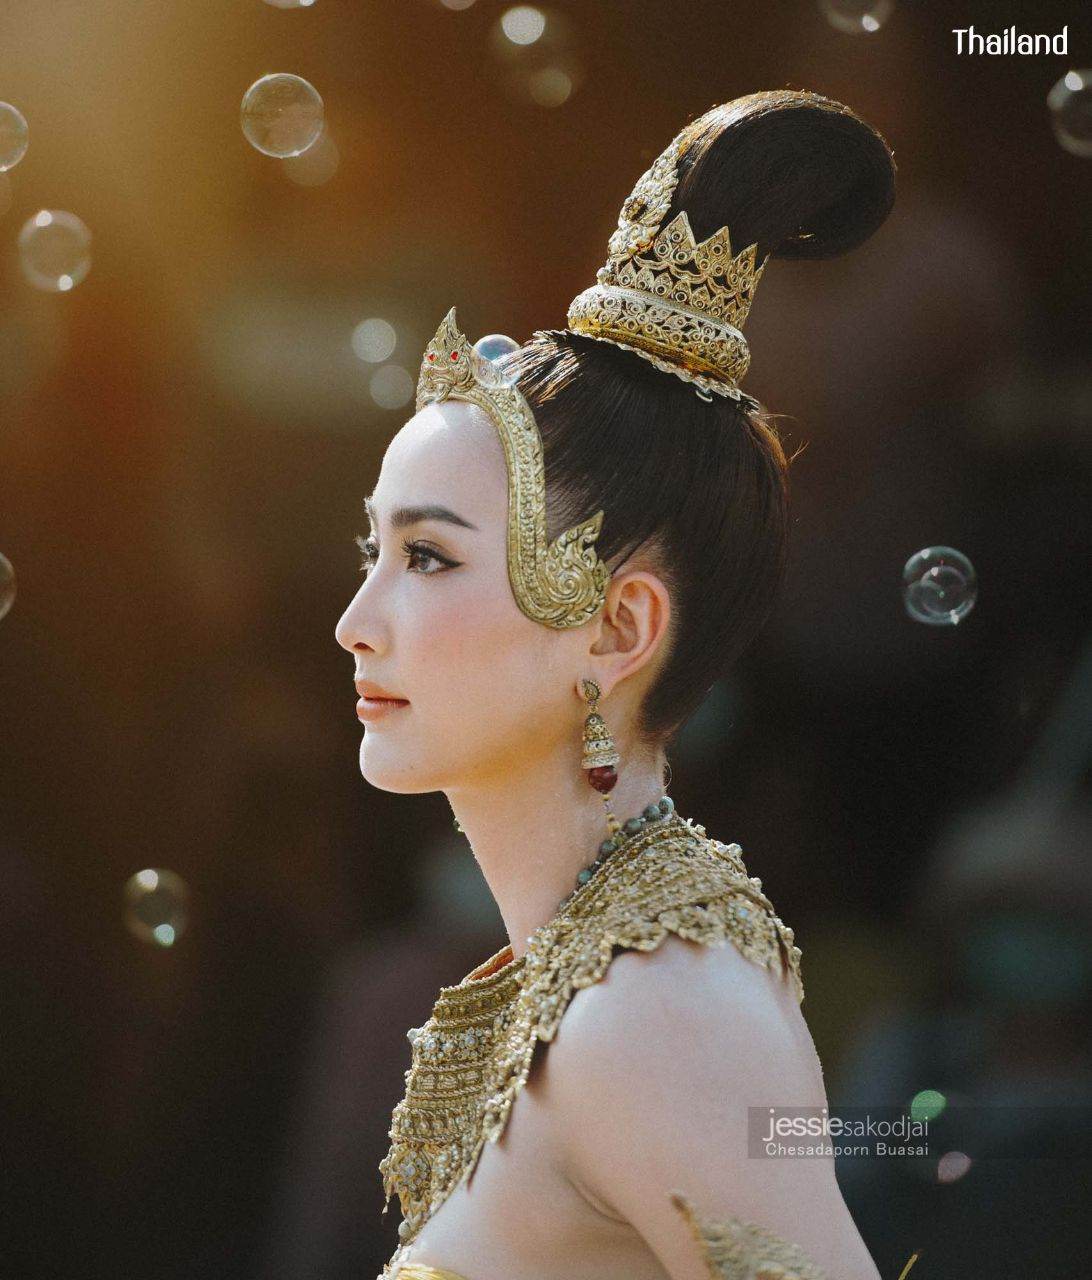 THAILAND 🇹🇭 | Thai Dance by Thai Actress "Taew - Natapohn Tameeruks"